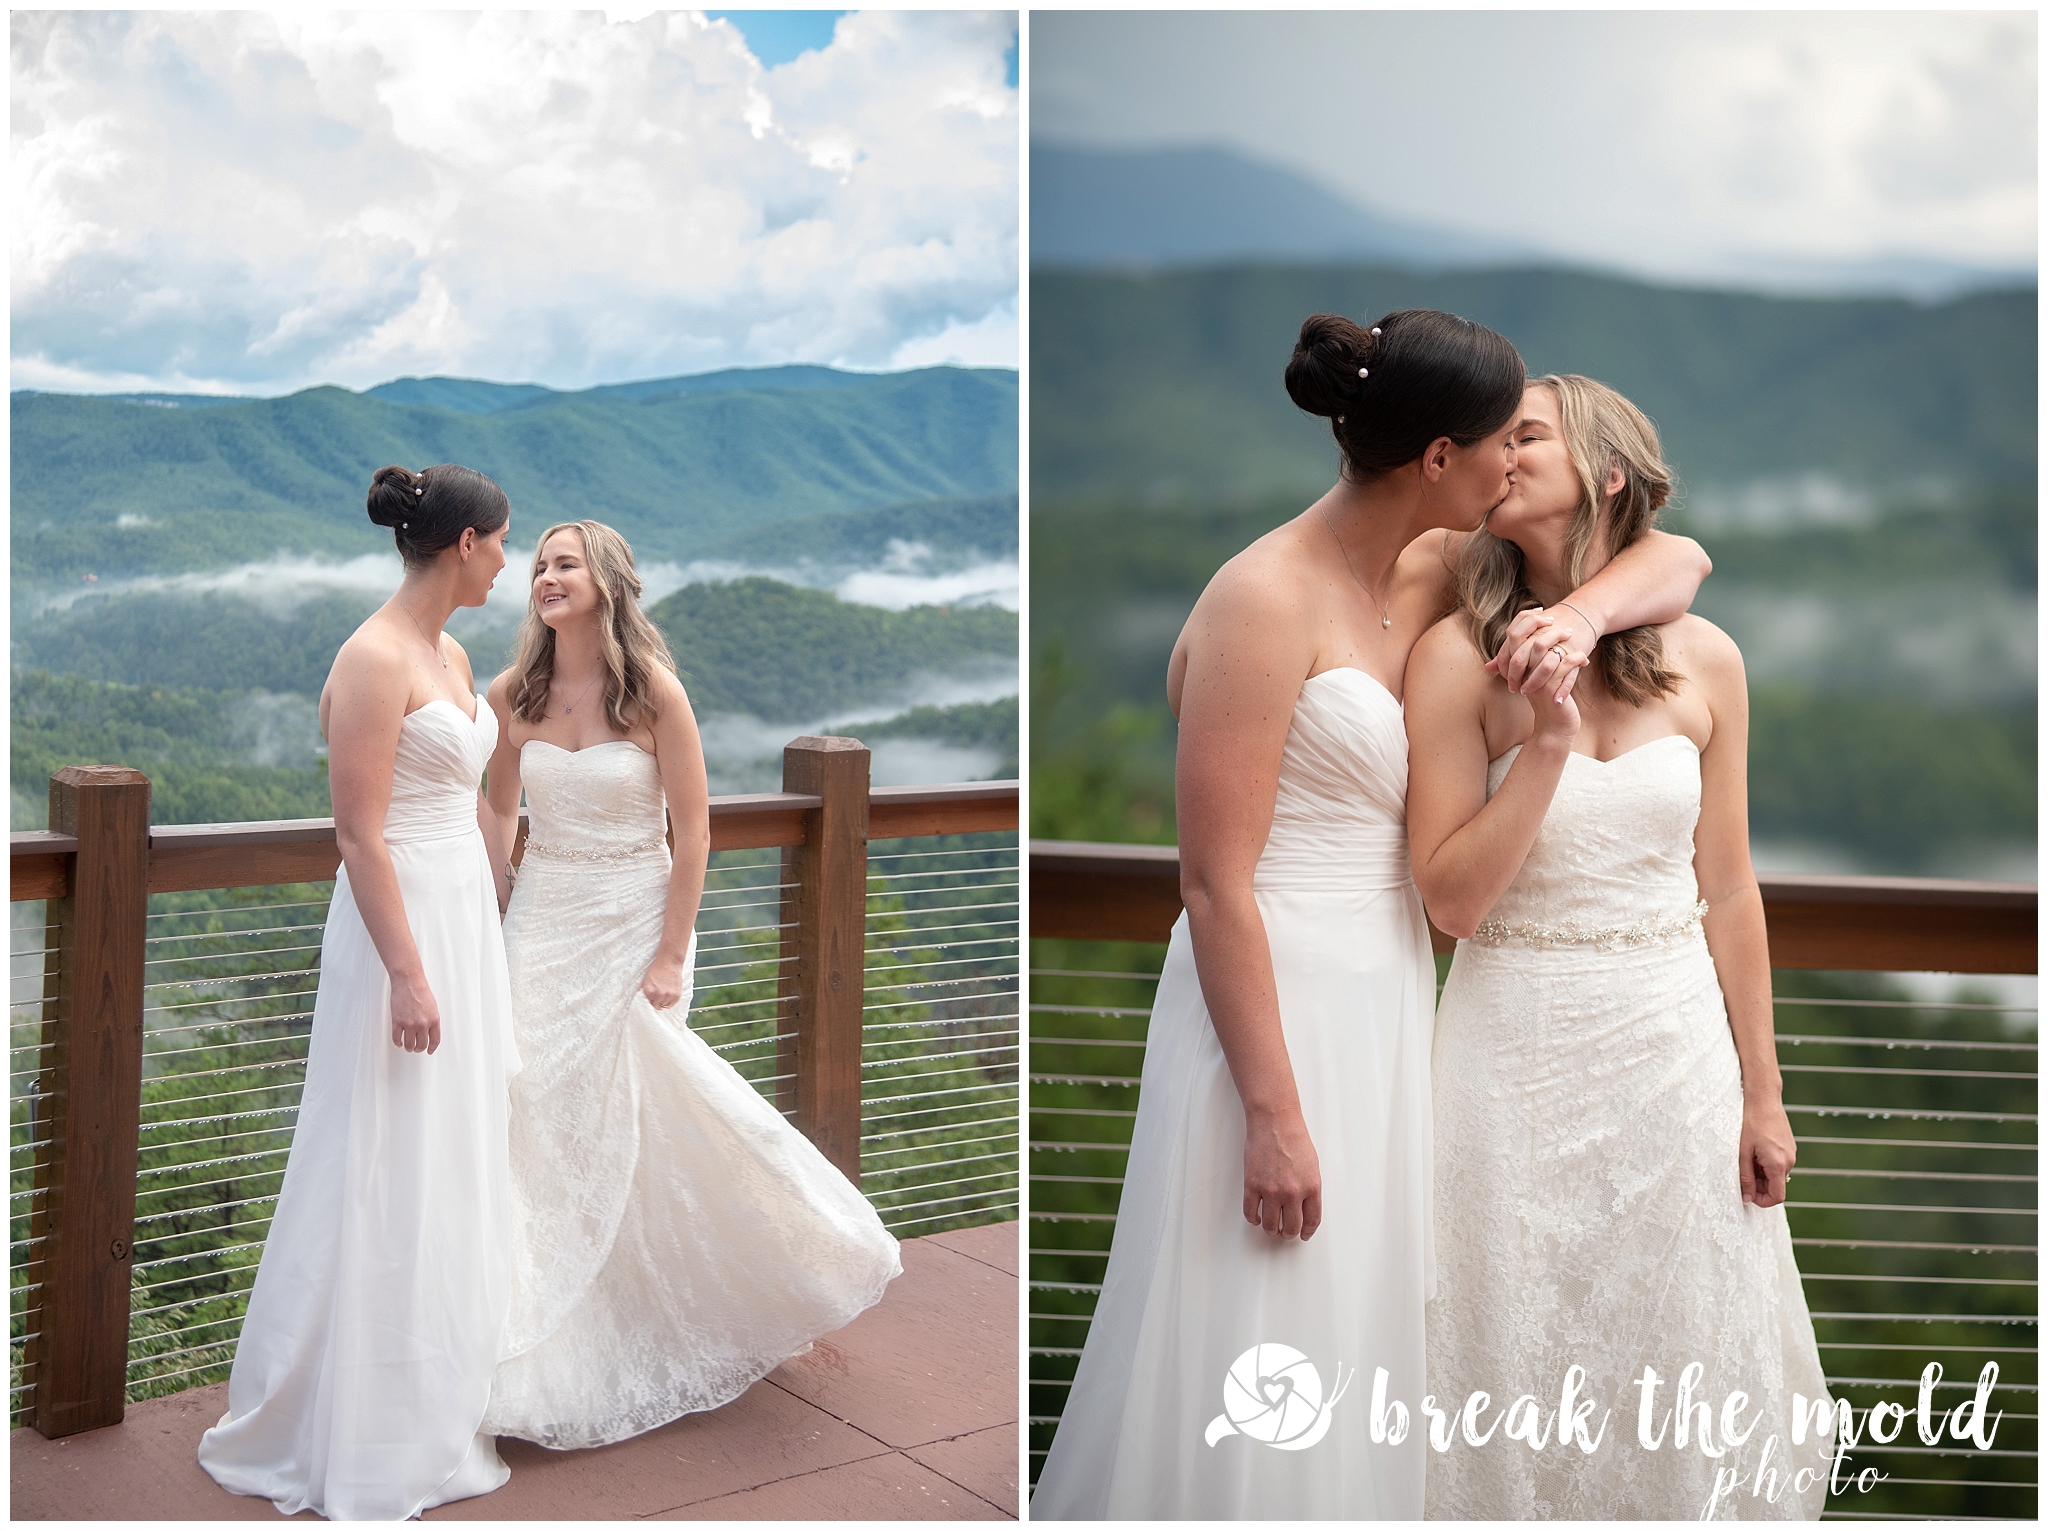 break-the-mold-photo-magnolia-gatlinburg-wedding-photographer-smoky-mountains-same-sex-lesbian-gay-wedding-rainbow-beautiful_0976.jpg